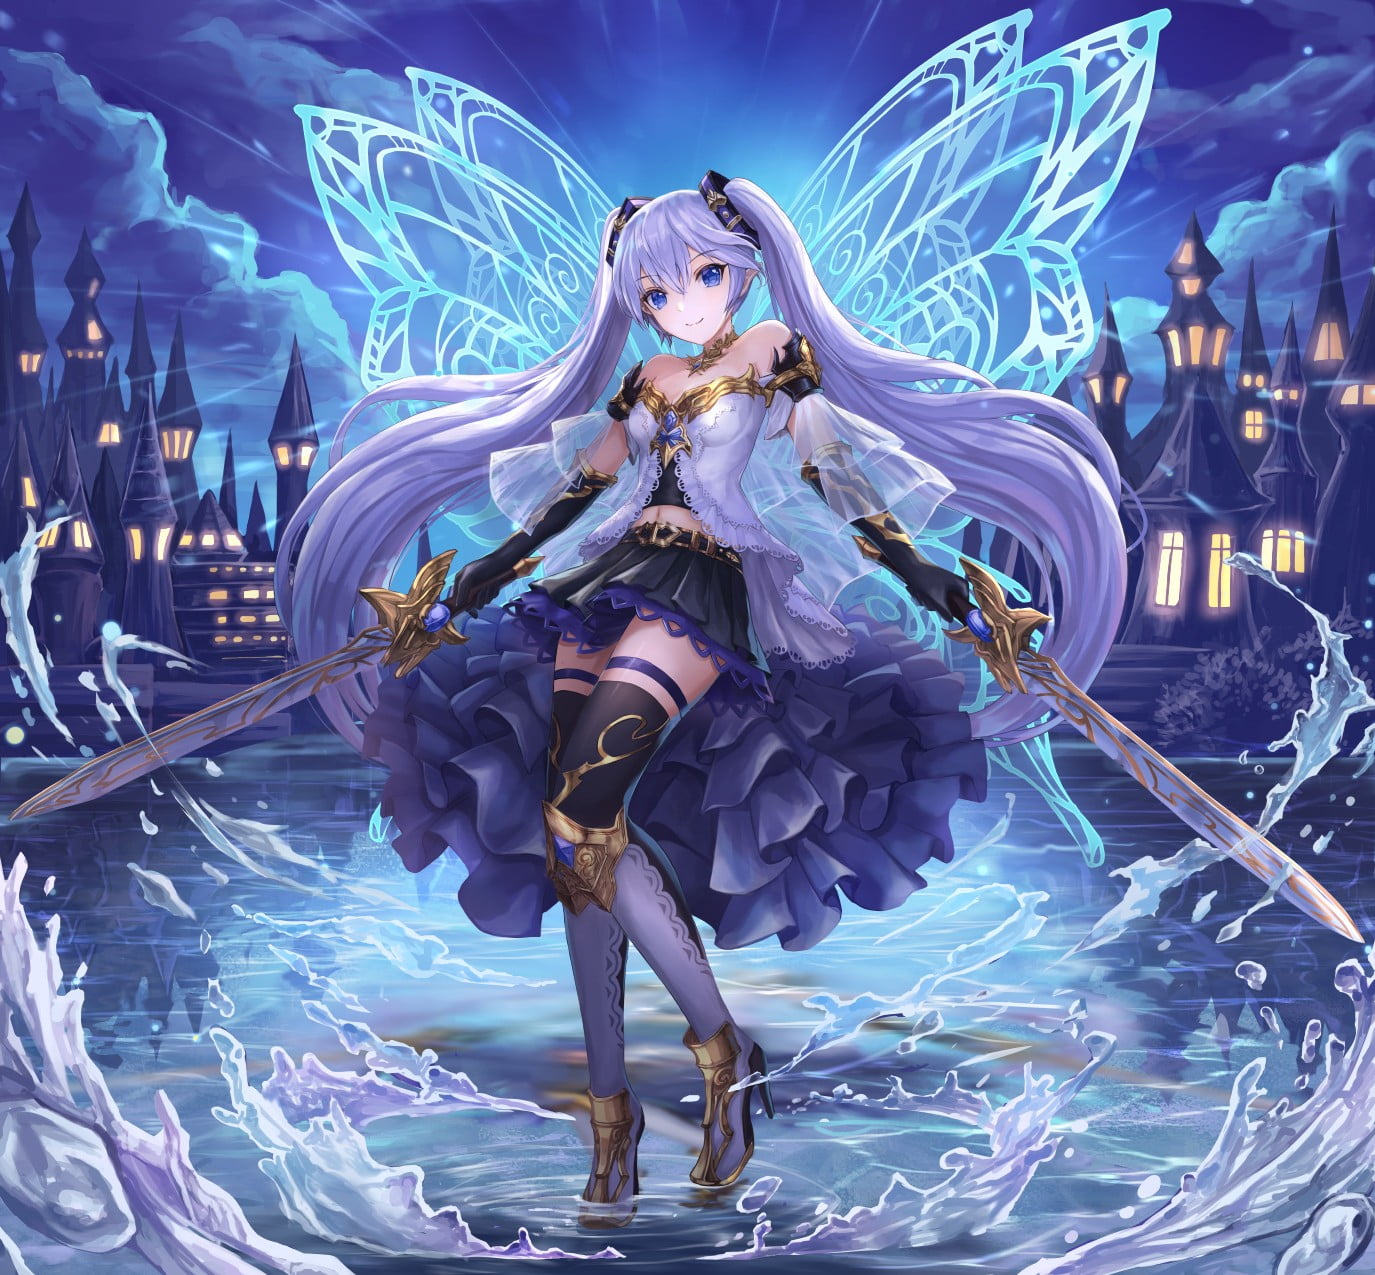 Aqua Fairy, Fairy Characters